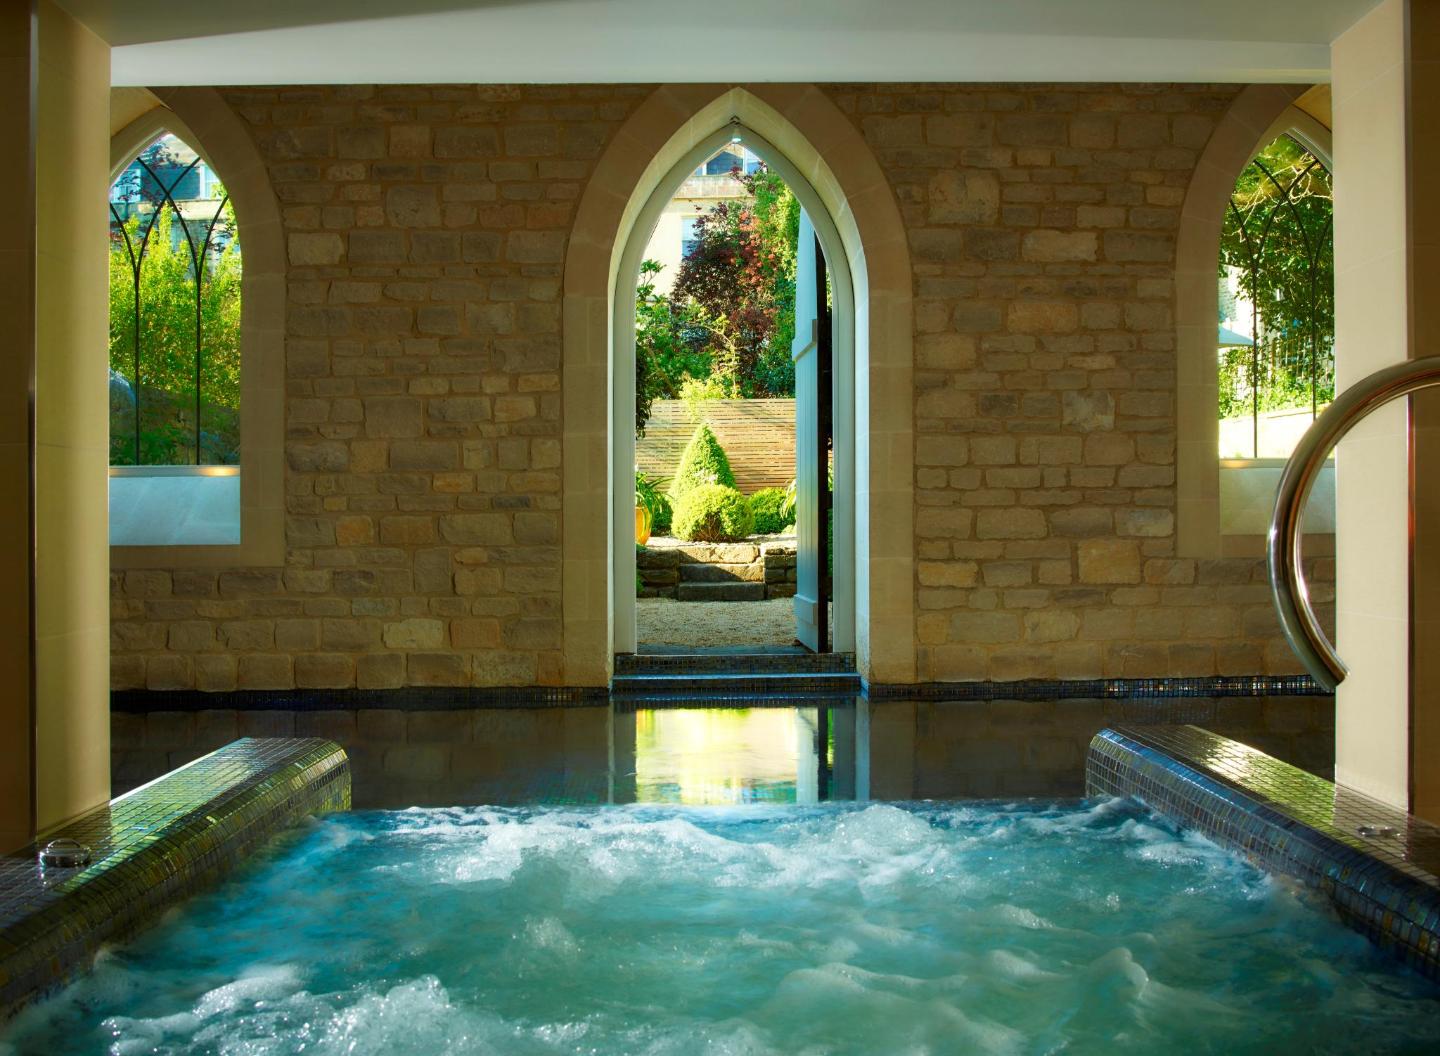 The 10 best spa hotels in Bath, UK | Booking.com